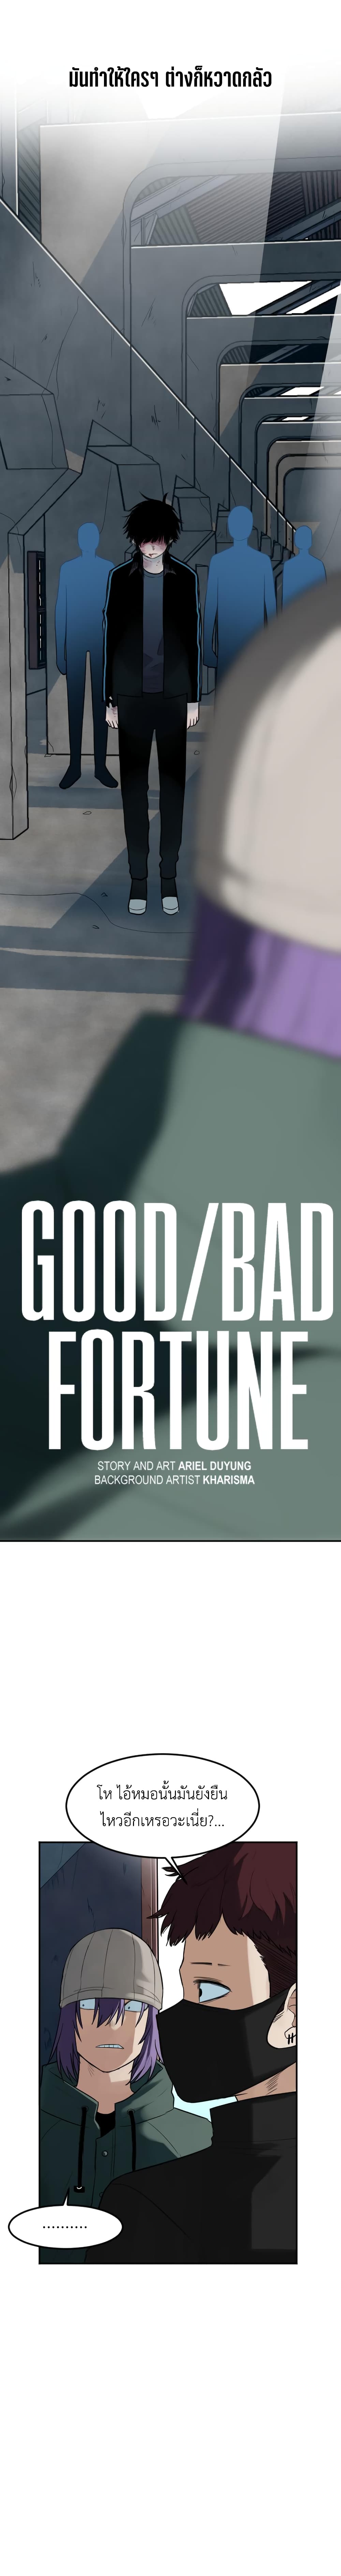 Good/Bad Fortune 70-70